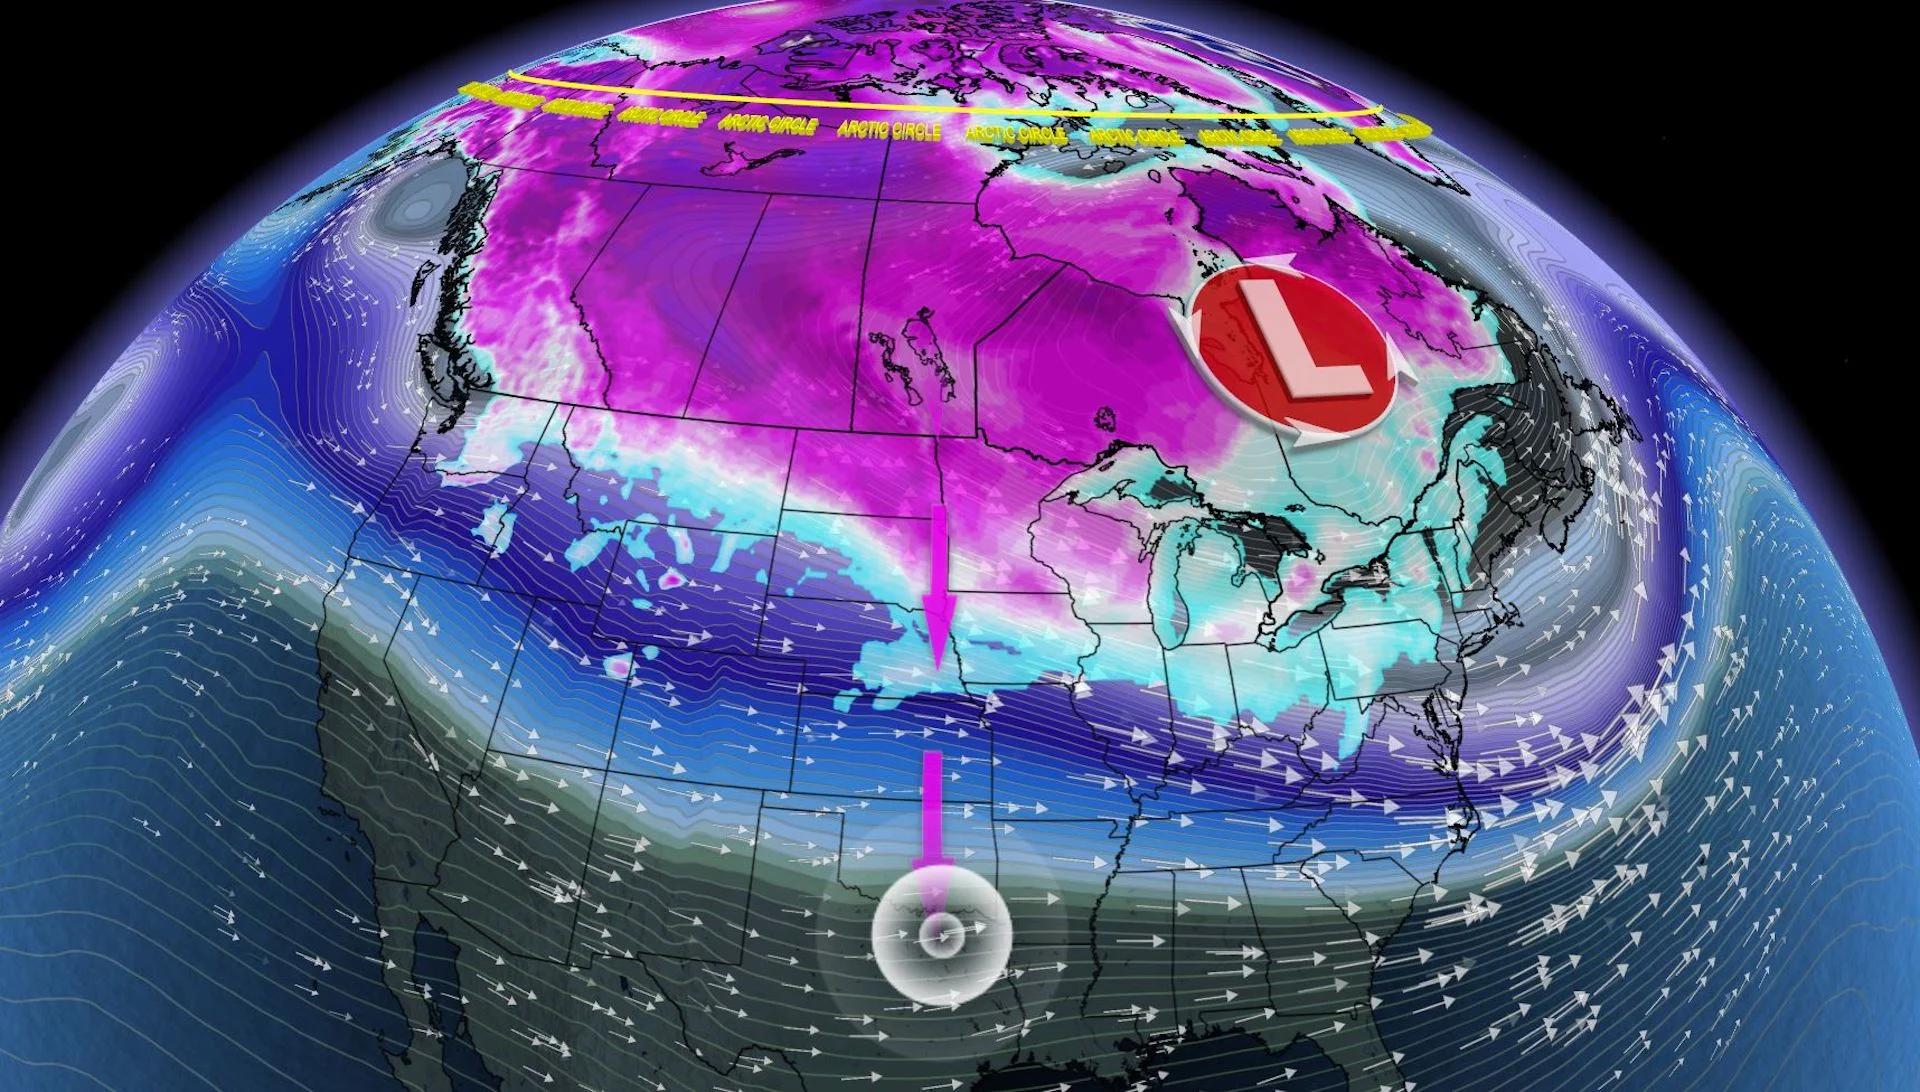 Texas freeze makes Nunavut a more suitable winter vacation spot